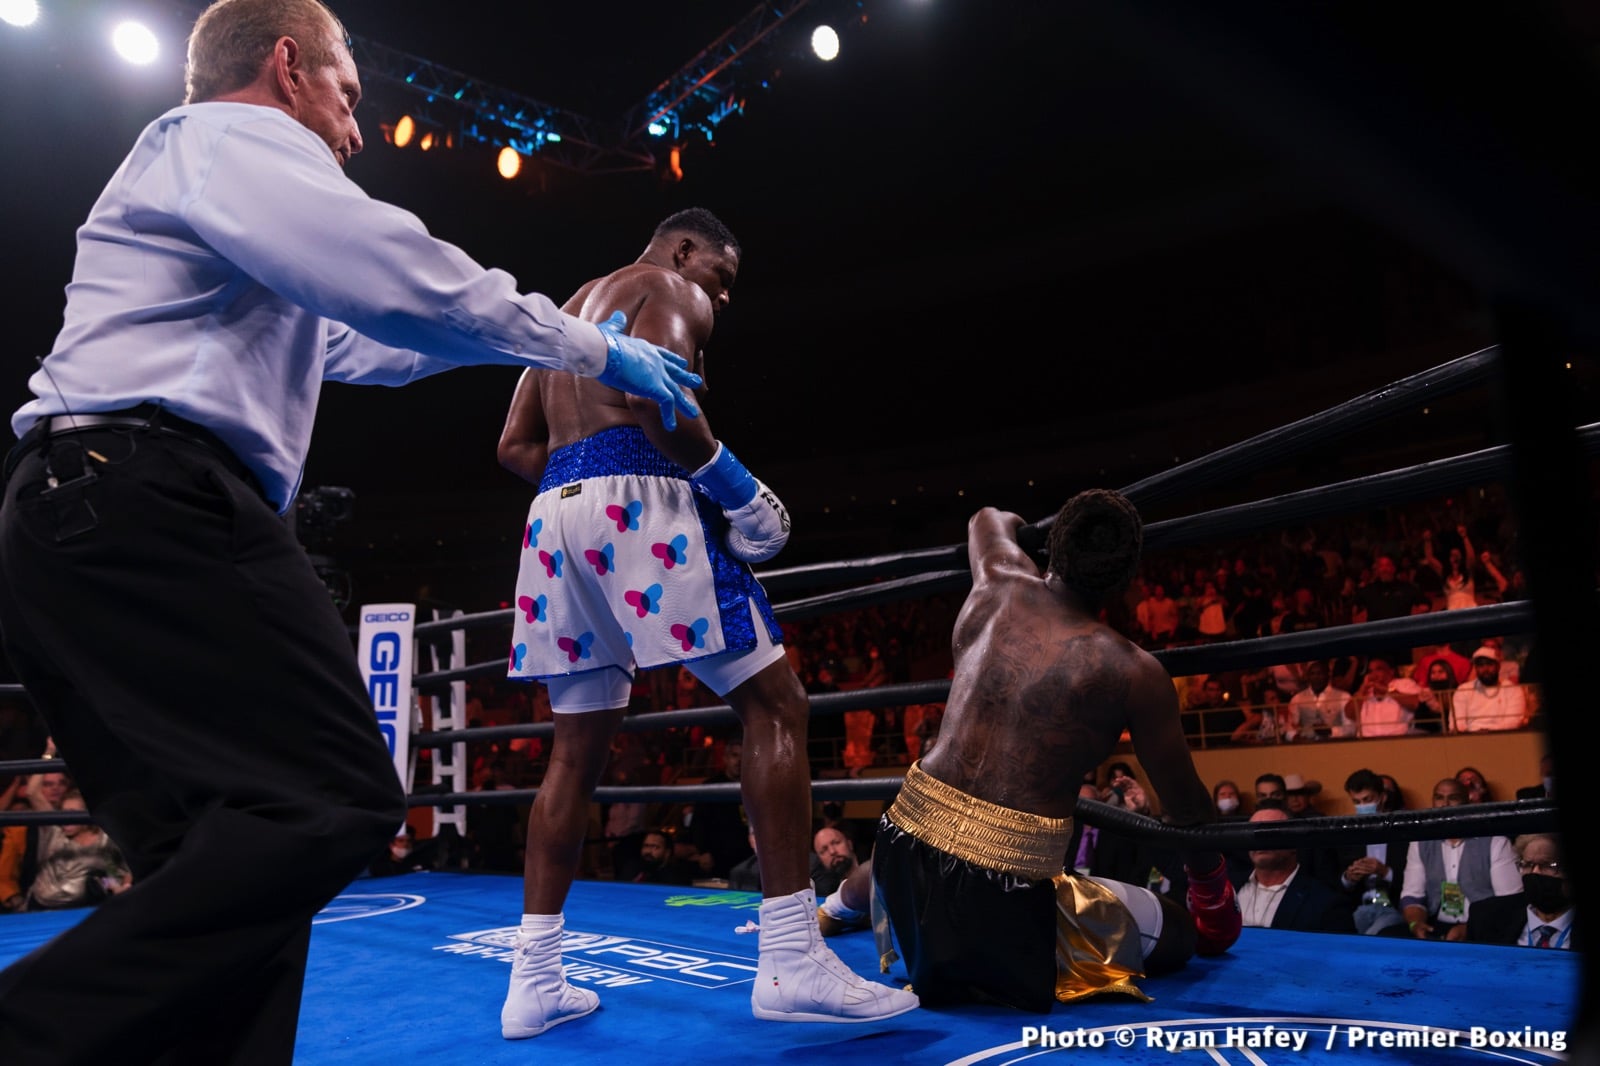 Frank Sanchez boxing image / photo